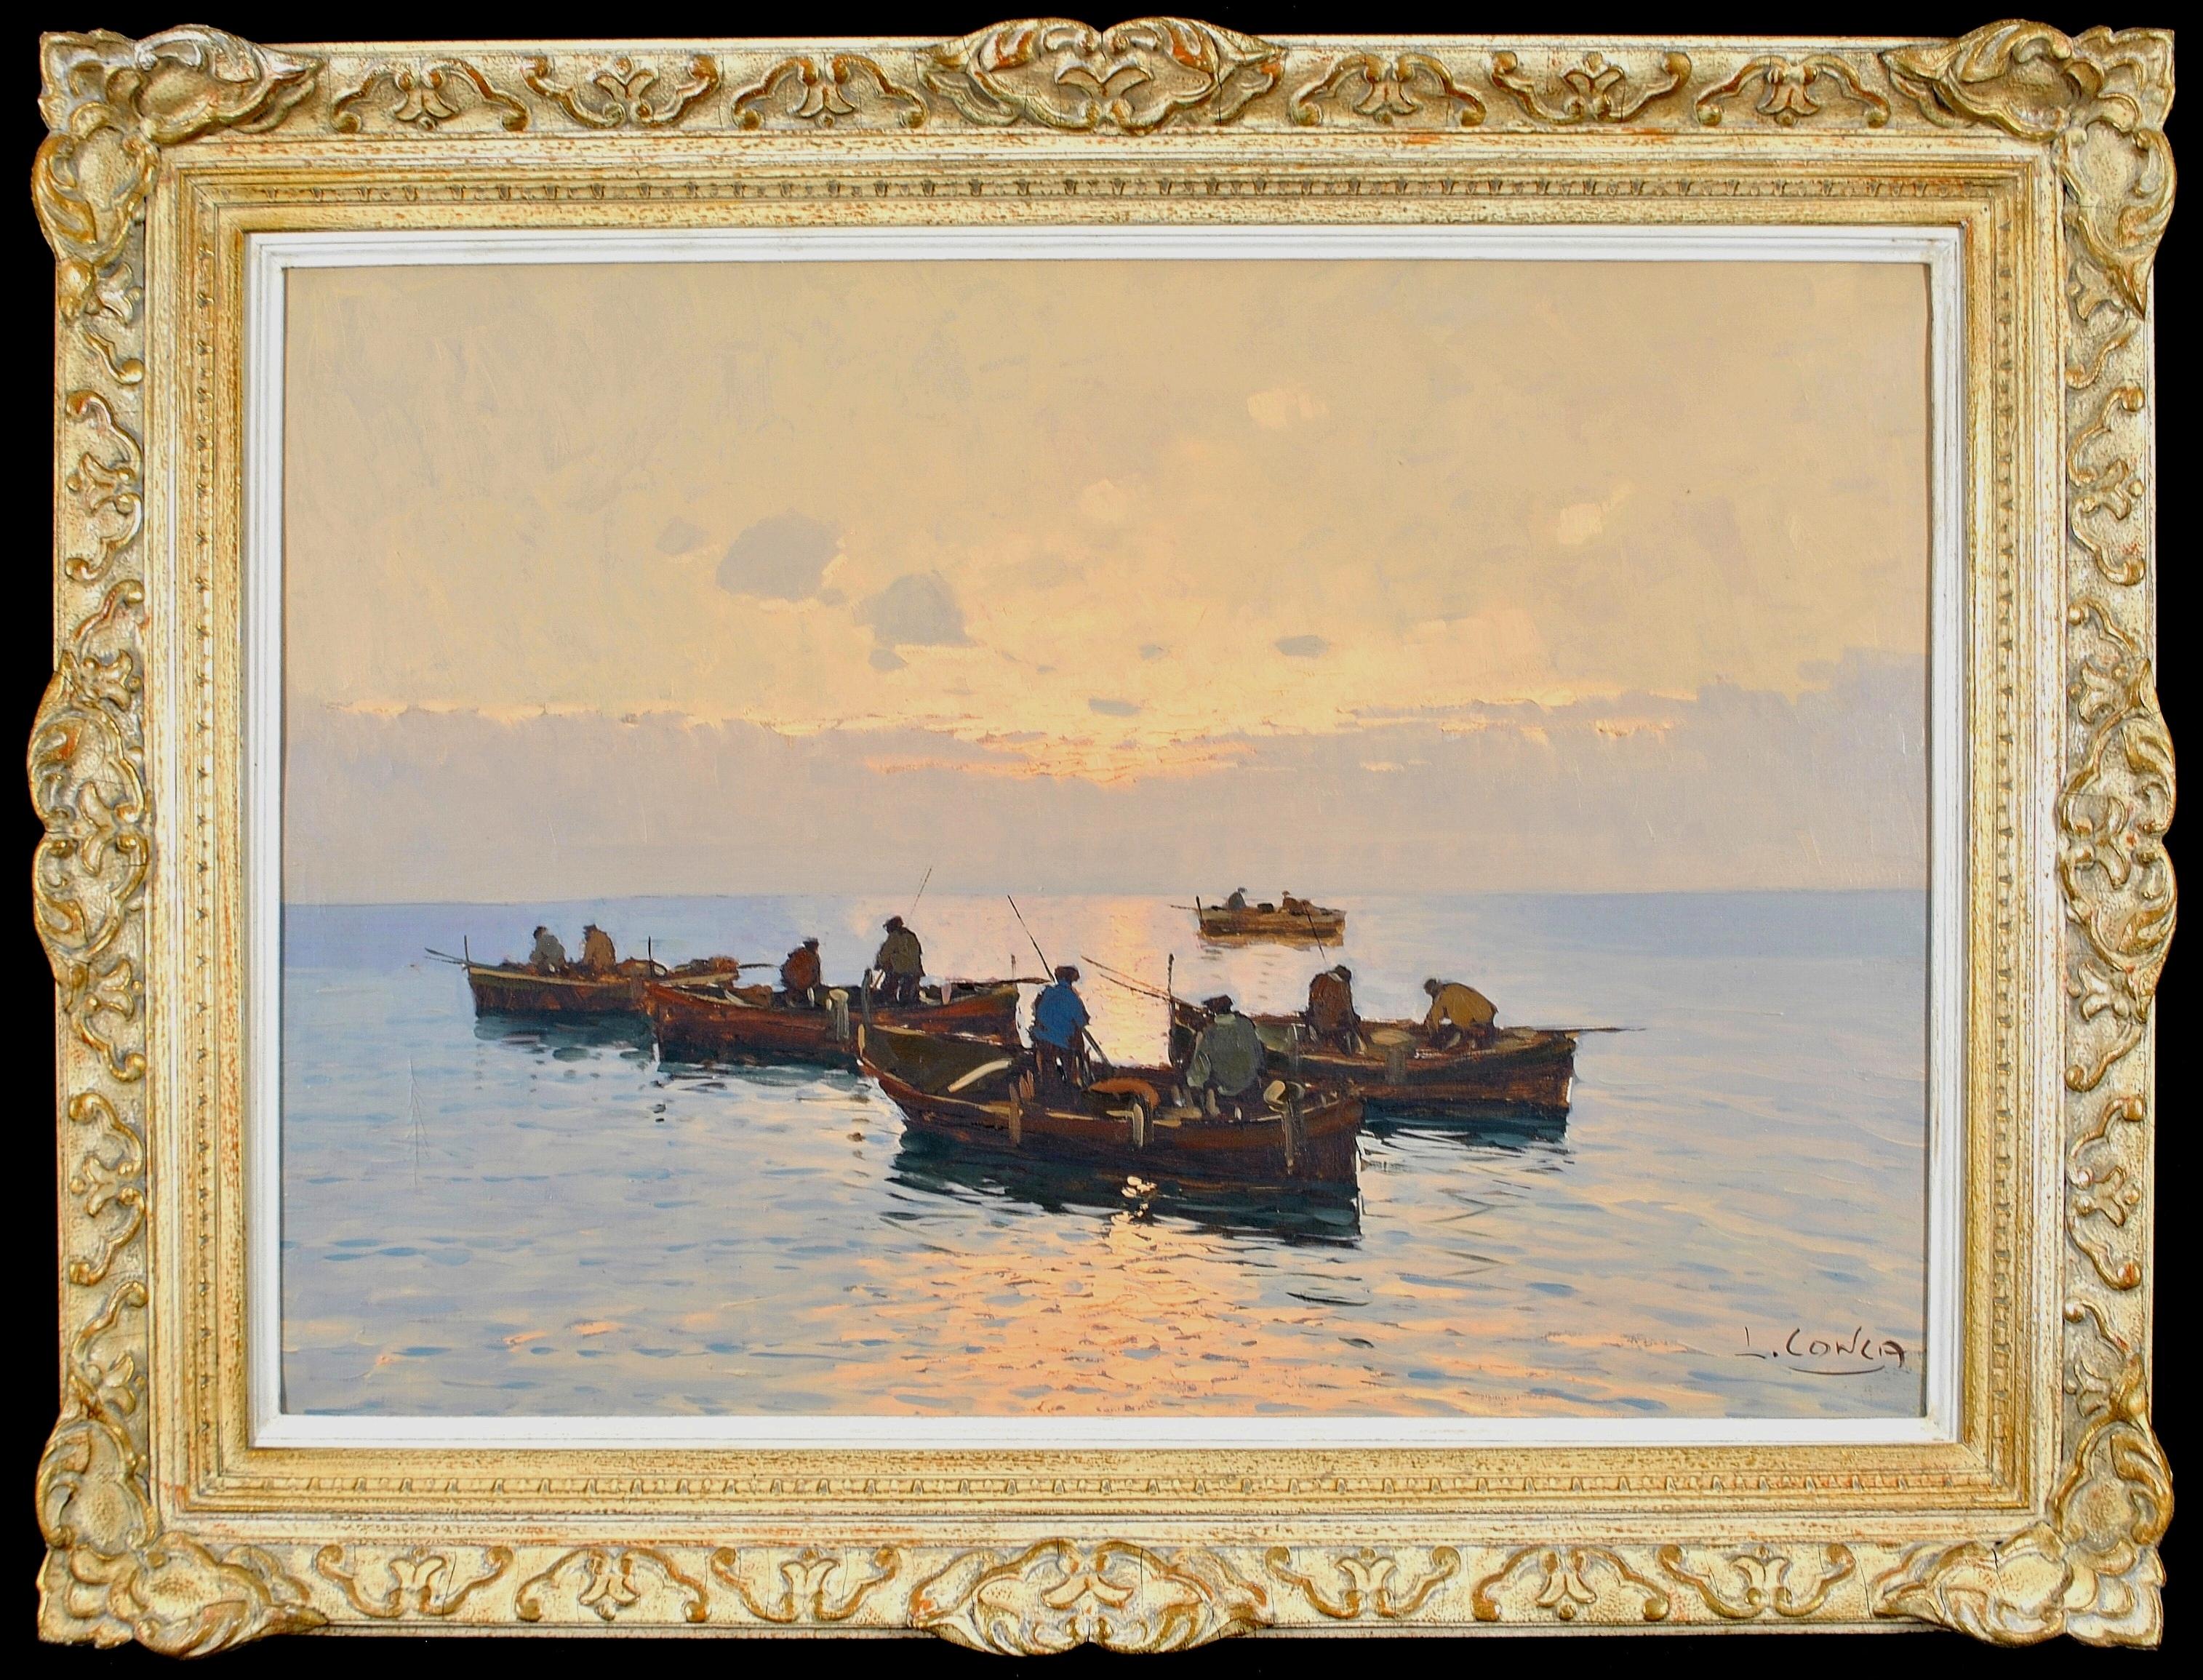 Luigi Conca Landscape Painting - Sunset off Capri - Large Italian Impressionist Naples Sea Seascape Oil Painting